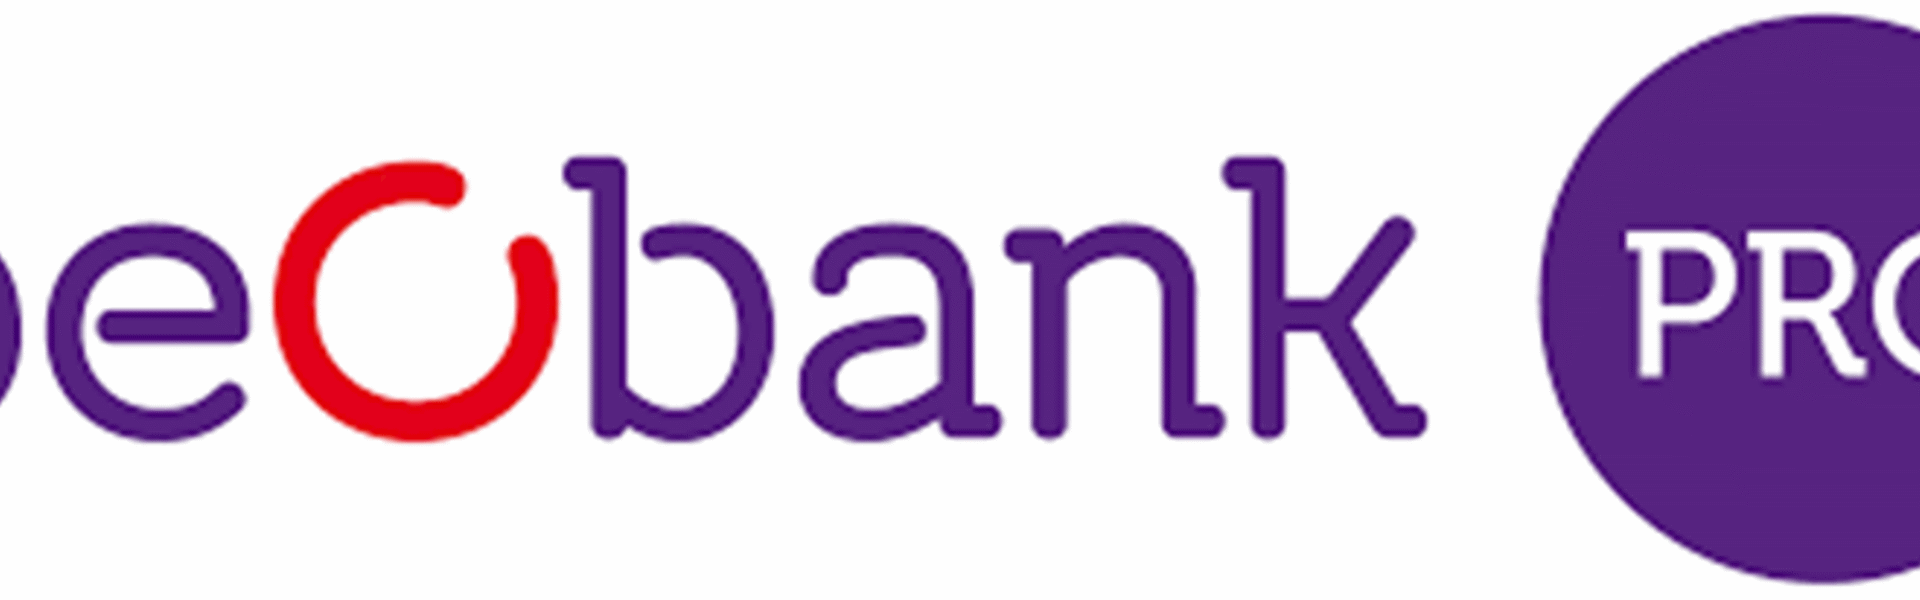 Beobank Pro Logo